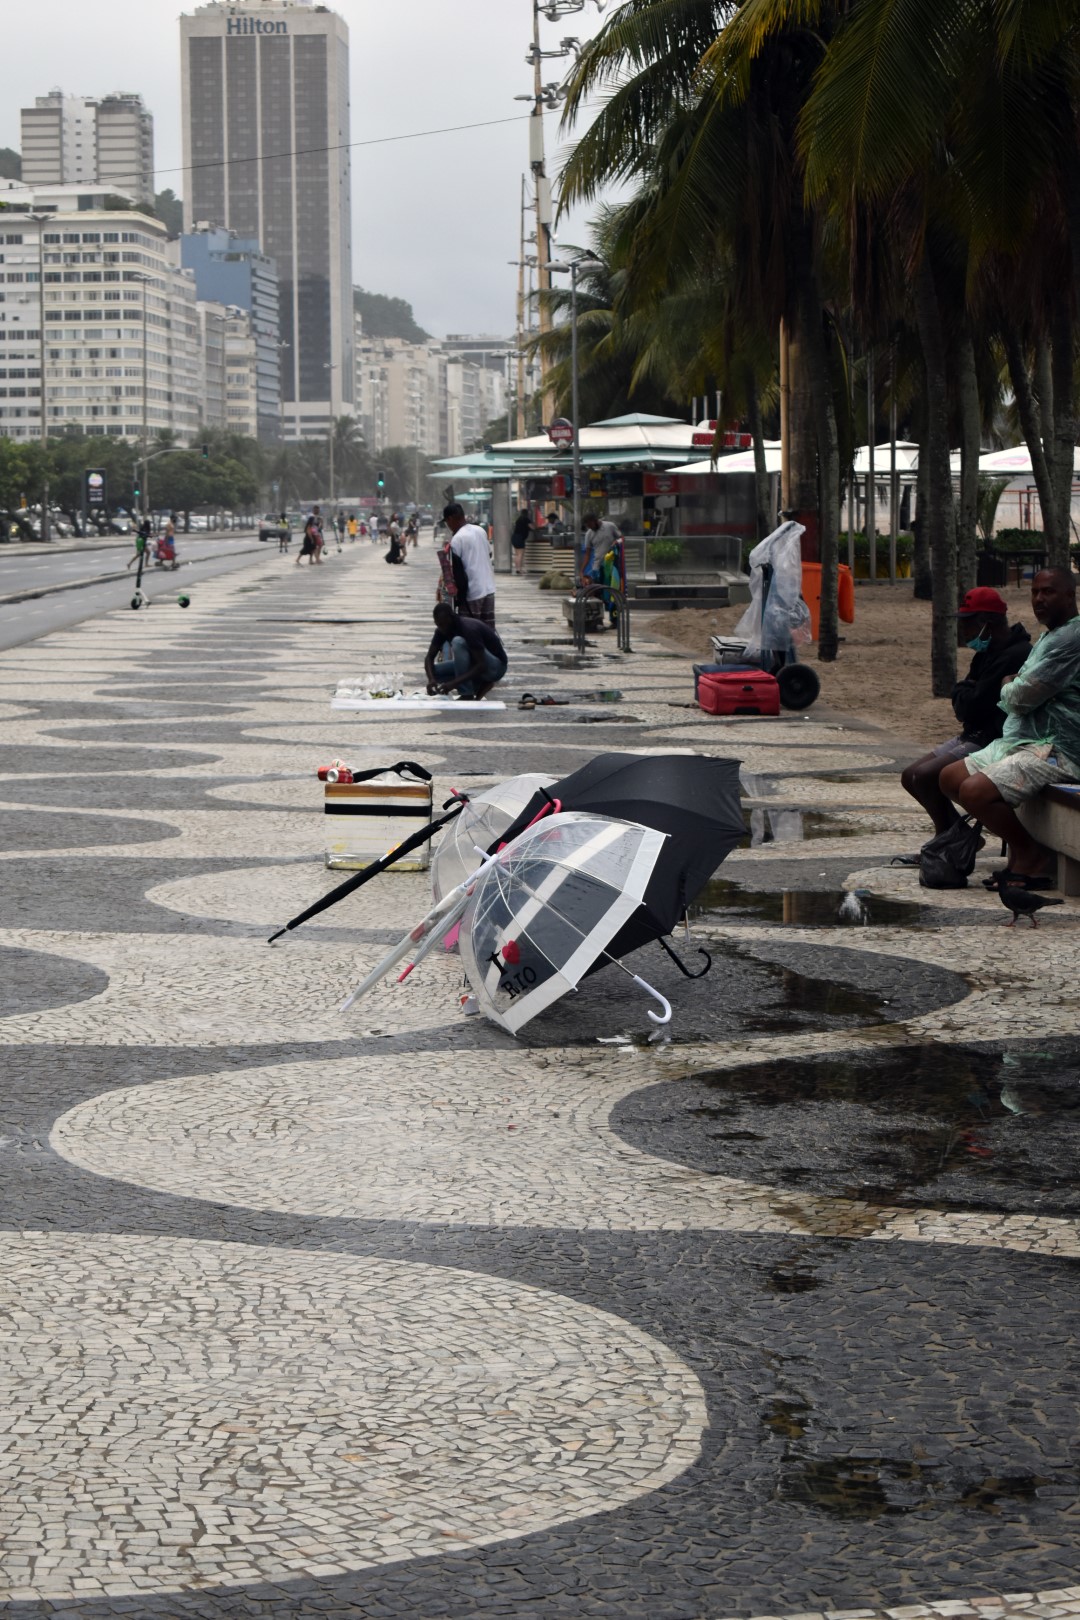 Avenida Atlântica and Praia de Copacabana, Rio de Janeiro